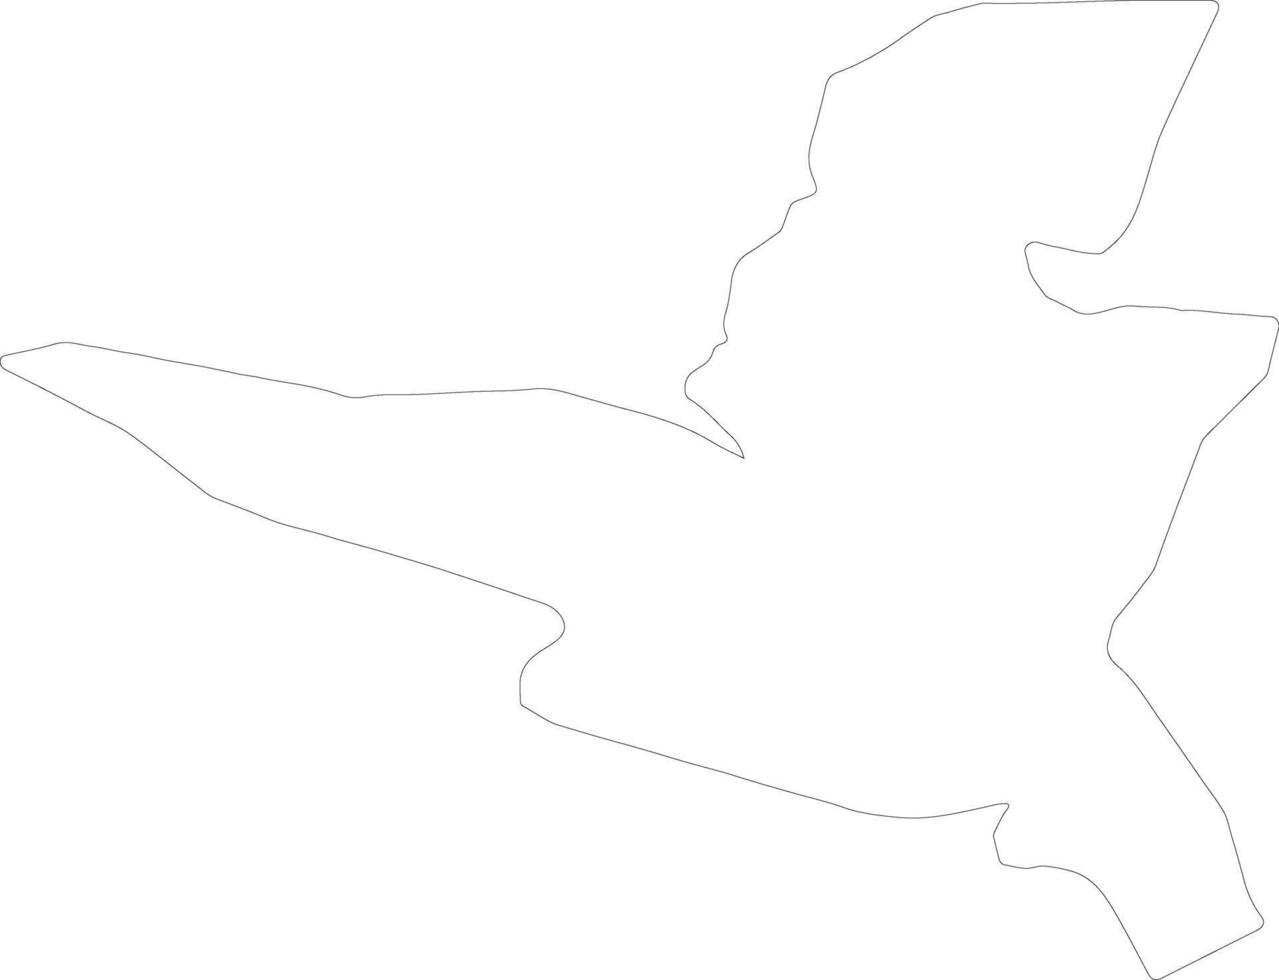 kranj slovenia schema carta geografica vettore